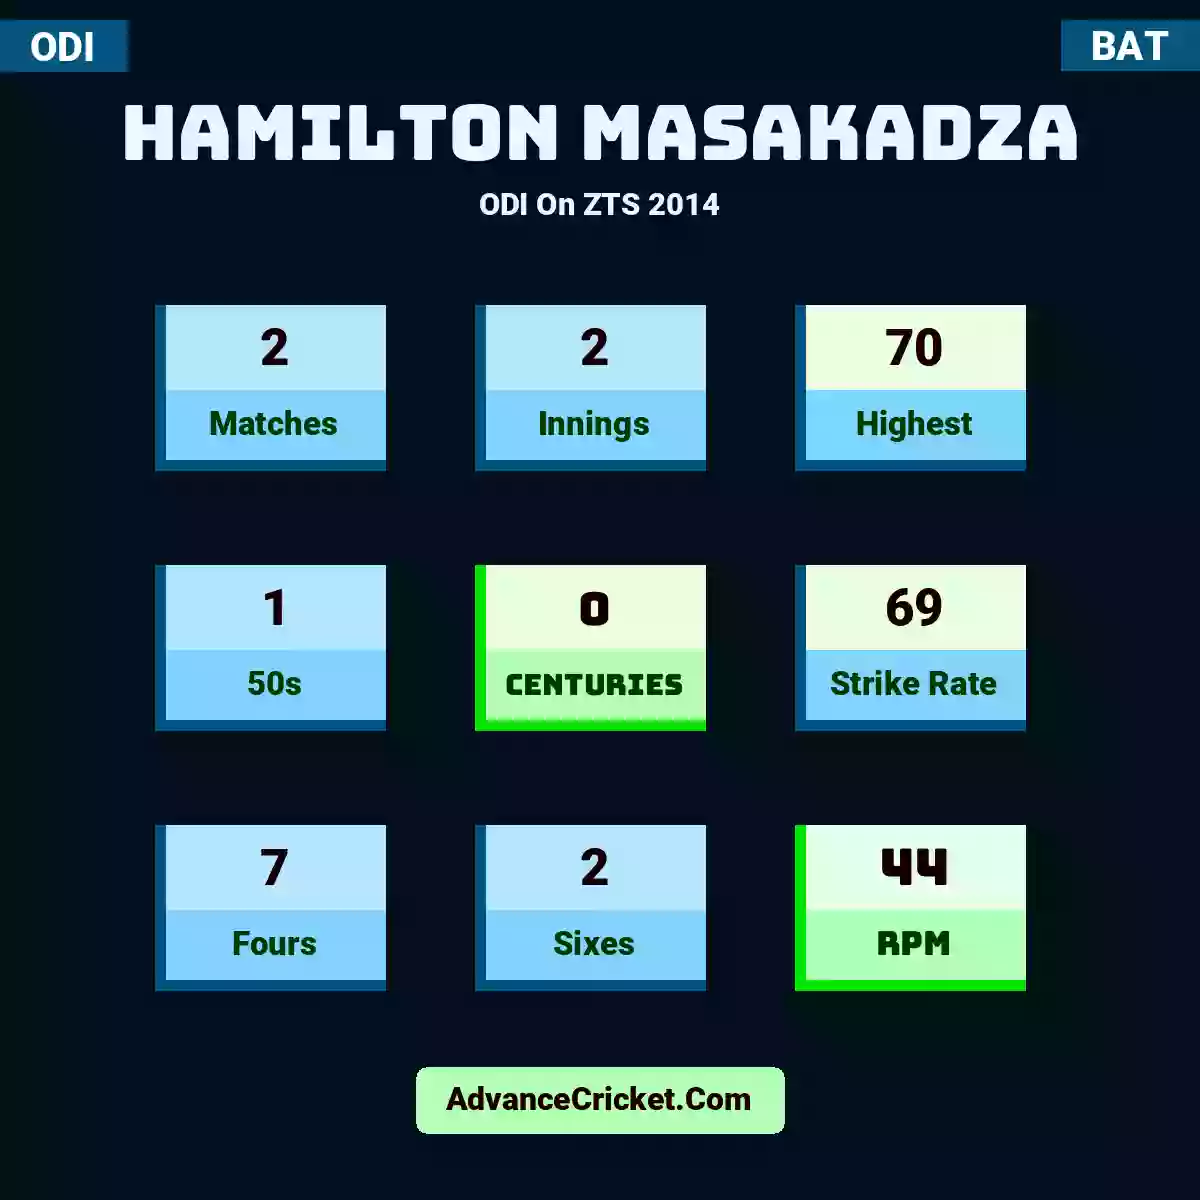 Hamilton Masakadza ODI  On ZTS 2014, Hamilton Masakadza played 2 matches, scored 70 runs as highest, 1 half-centuries, and 0 centuries, with a strike rate of 69. H.Masakadza hit 7 fours and 2 sixes, with an RPM of 44.